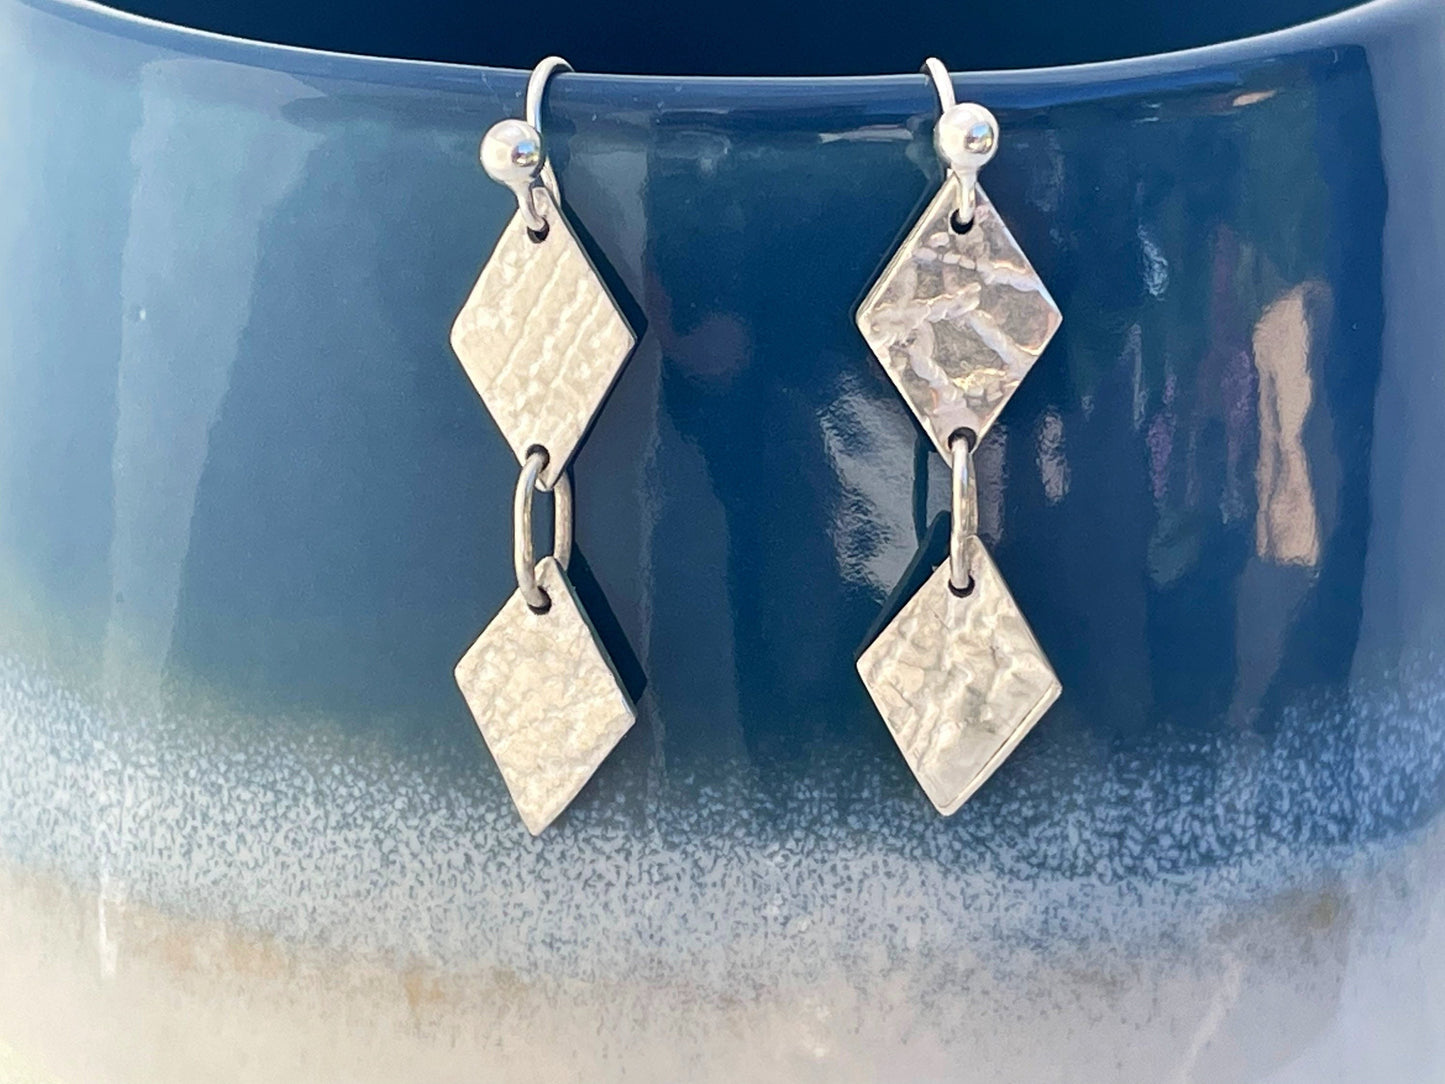 Handmade textured geometric drop earrings.